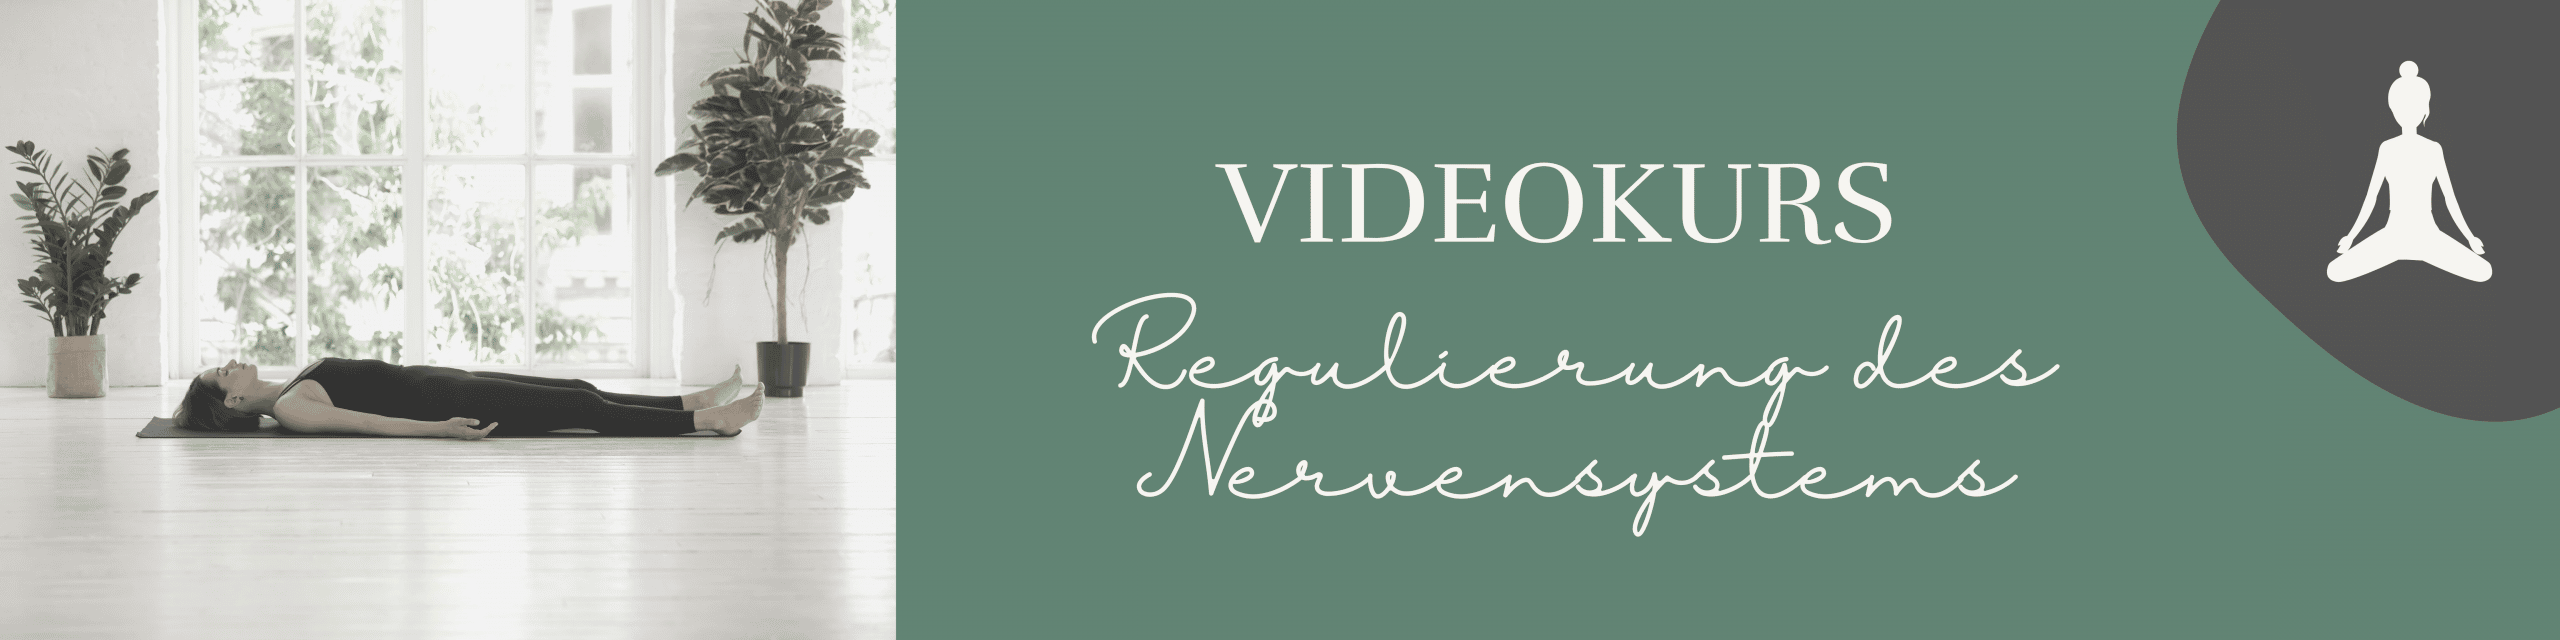 Nervensystem-Videokurs